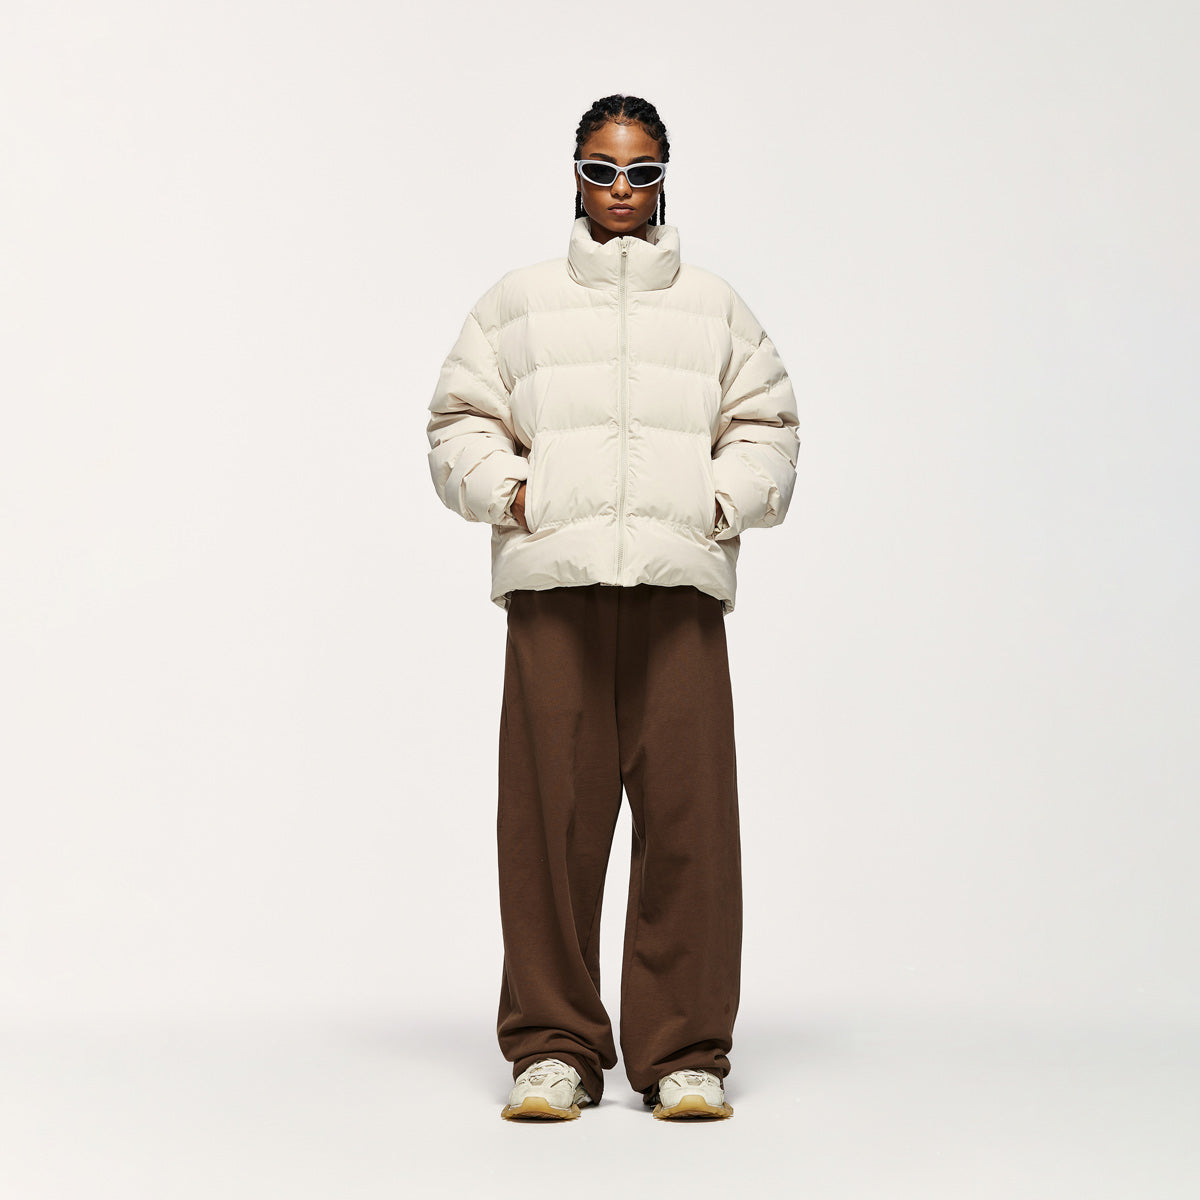 Unisex Puffer Jacket for Women - Versatile Winter Wardrobe